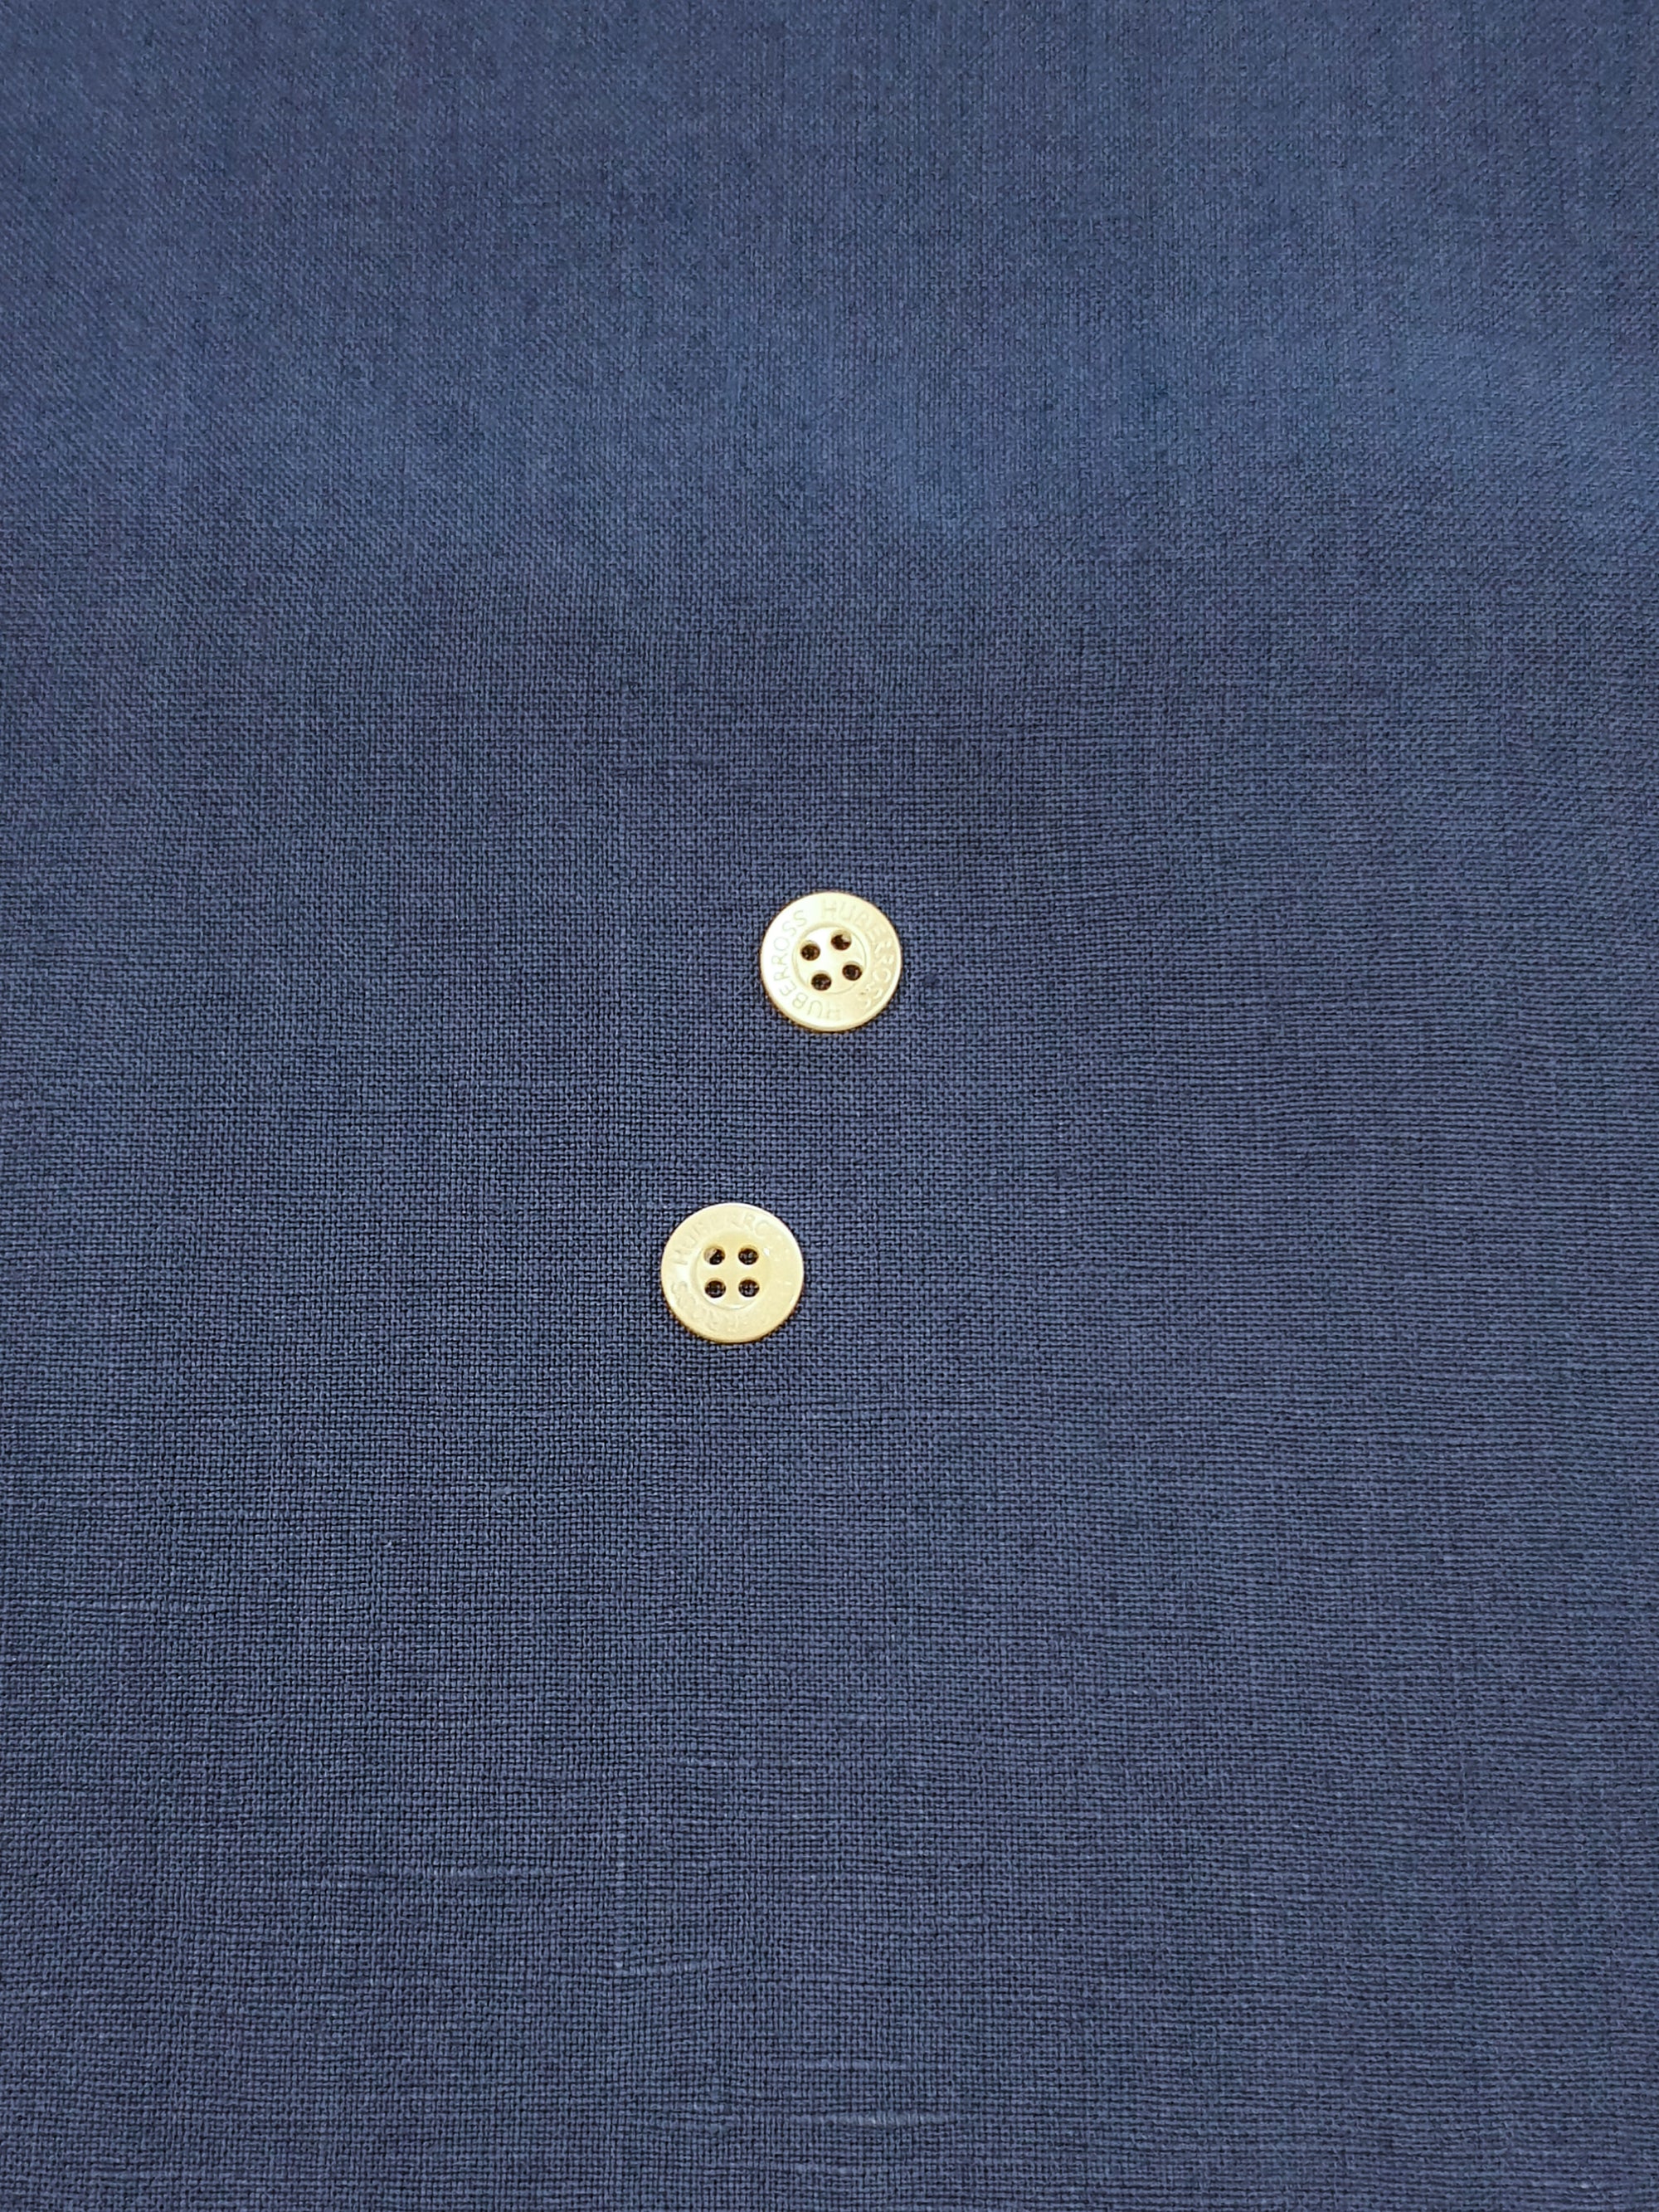 950.052 Medium Blue Irish Linen Suiting Fabrics